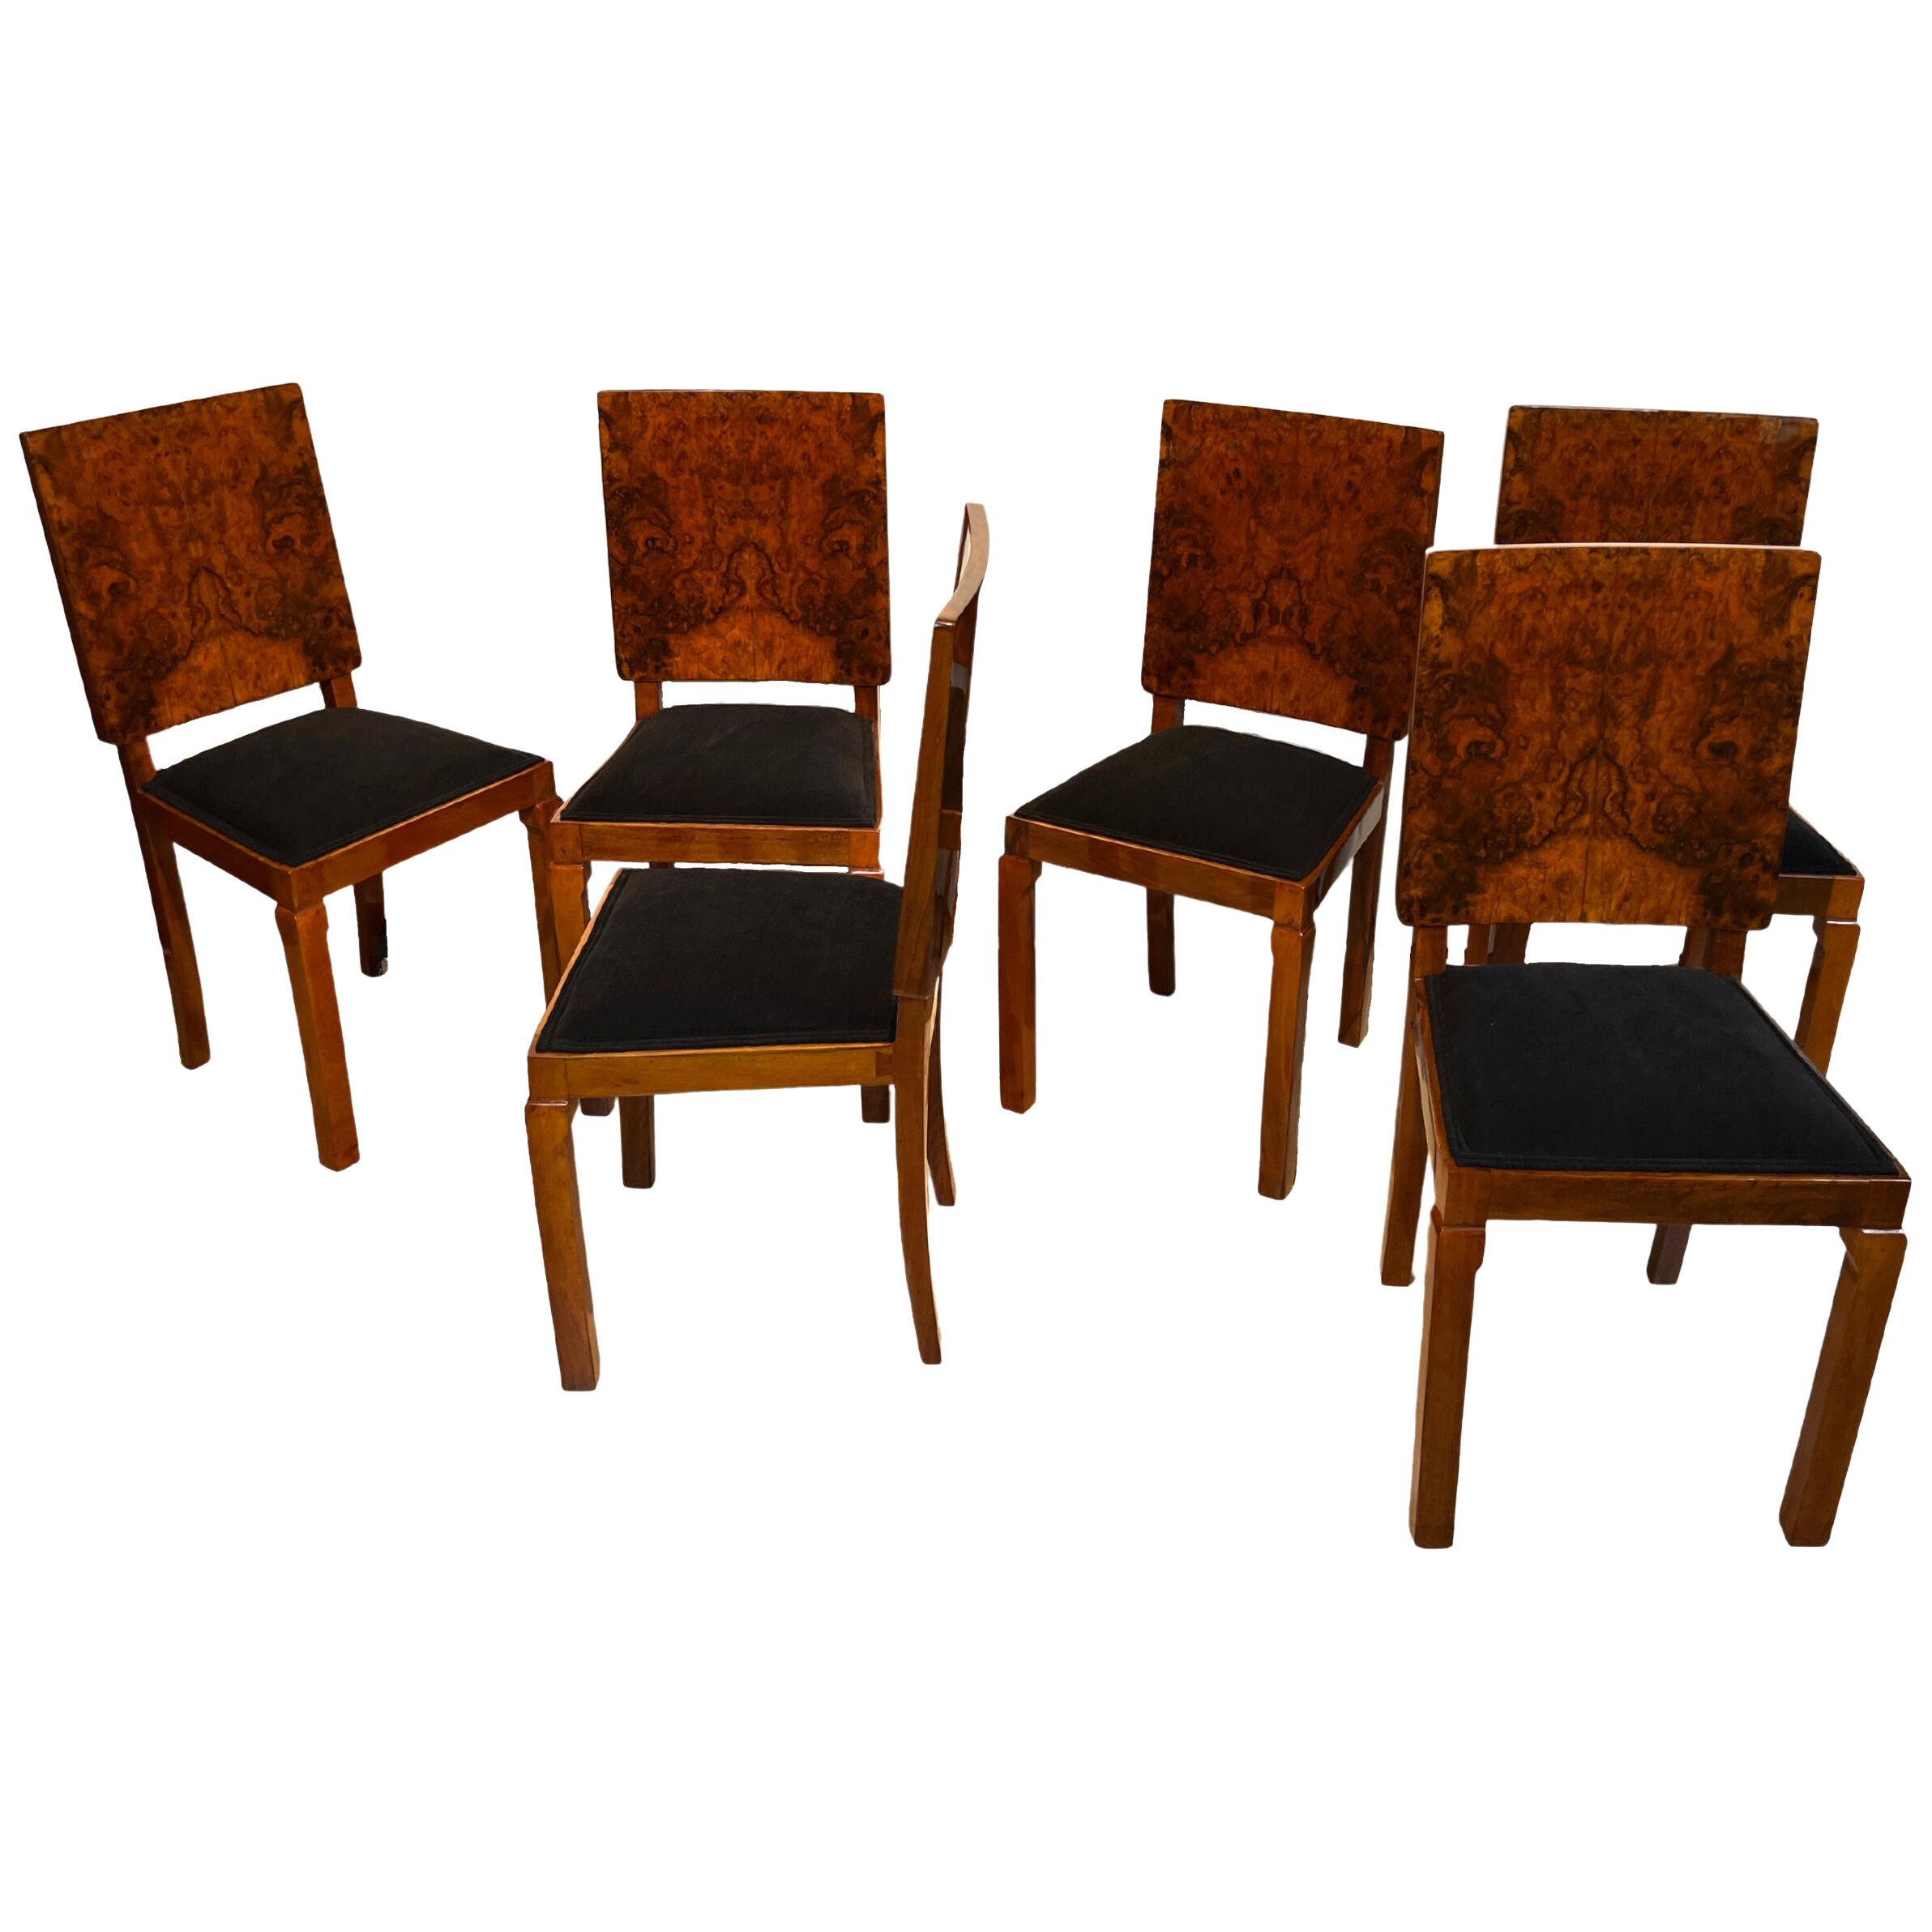 Set of Six Art Deco Dining Chairs, Walnut Roots Veneer, France circa 1930